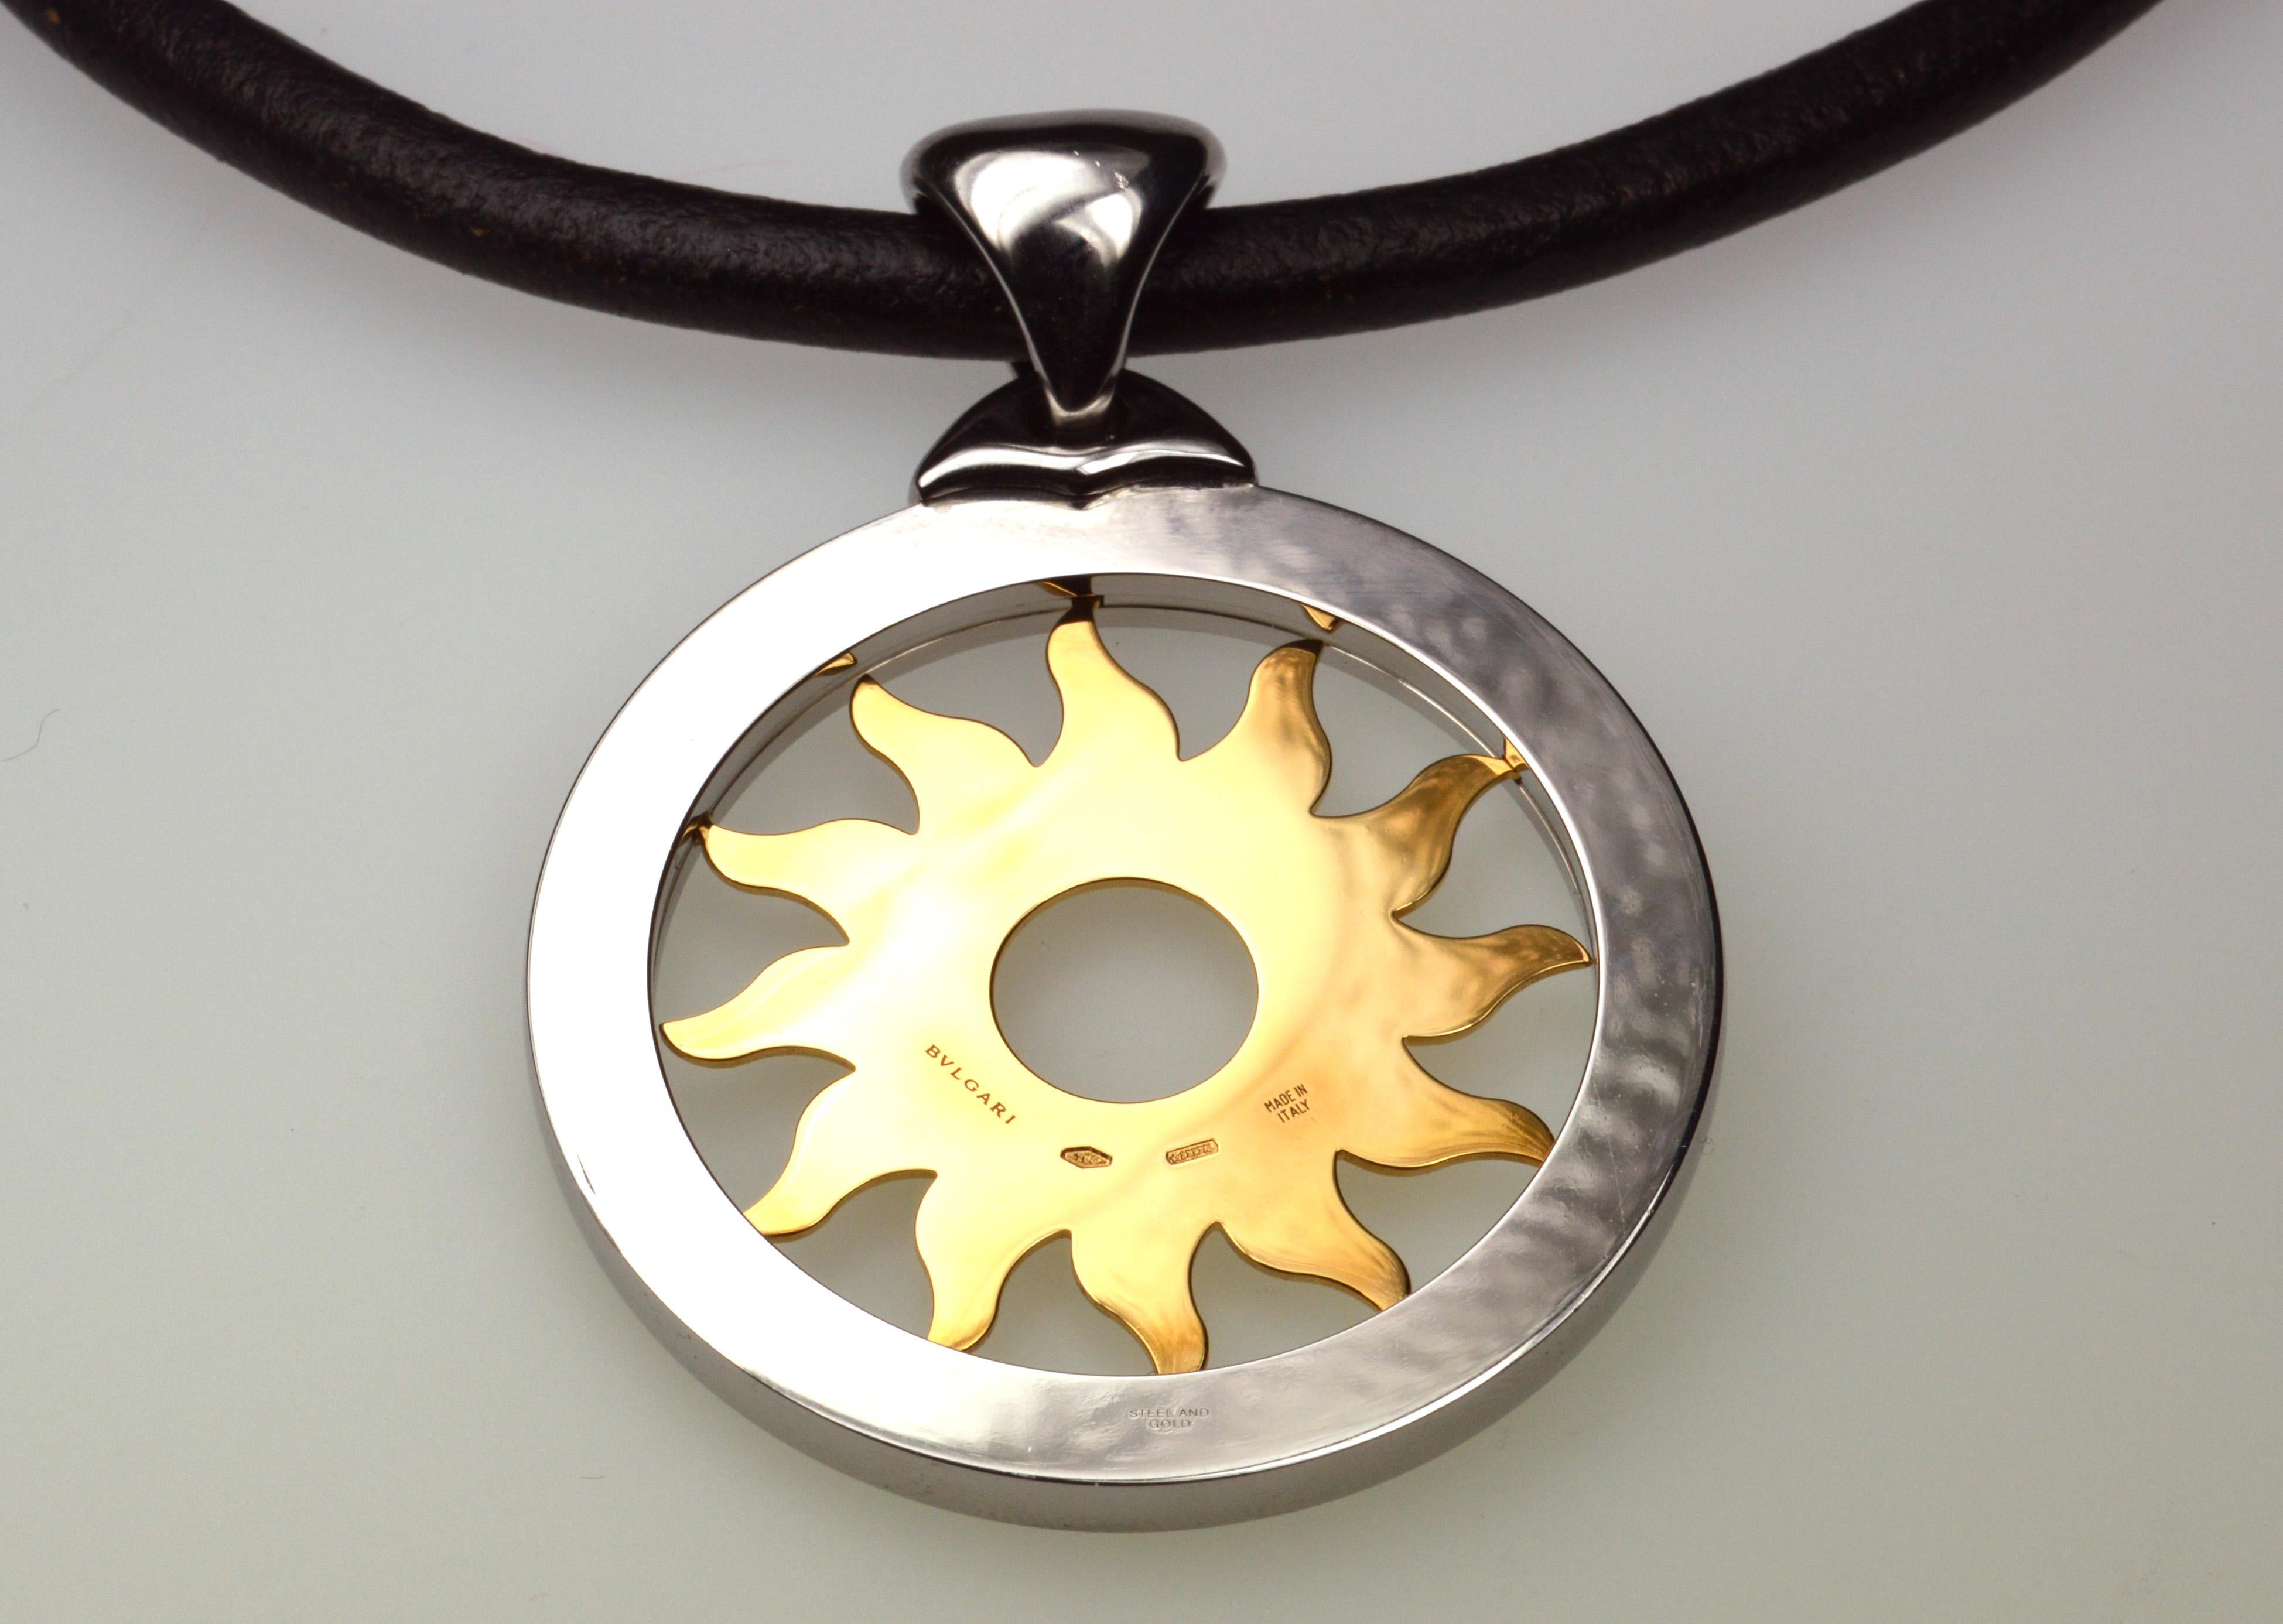 Bulgari Tondo Sun steel and 18K yellow gold pendant on a black leather cord
Signature: Bulgari